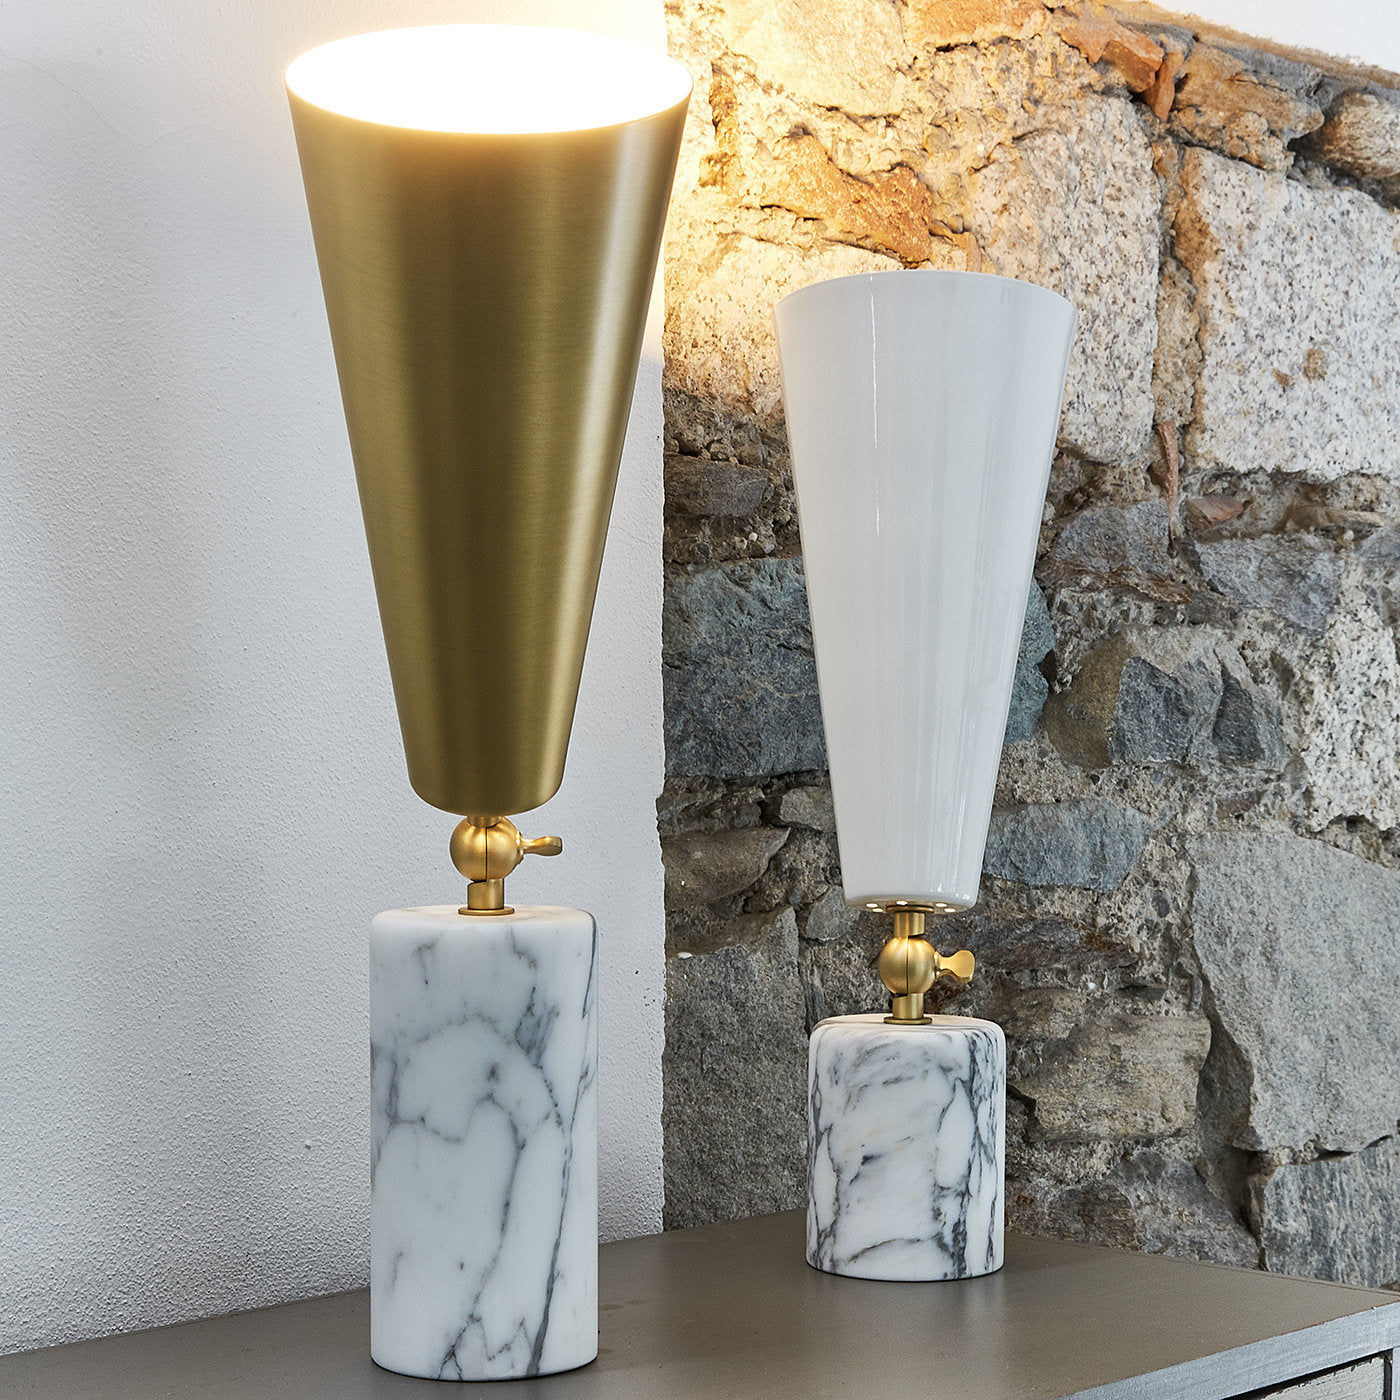 Vox Alta Table Lamp by Lorenza Bozzoli in Carrara Marble - Alternative view 3